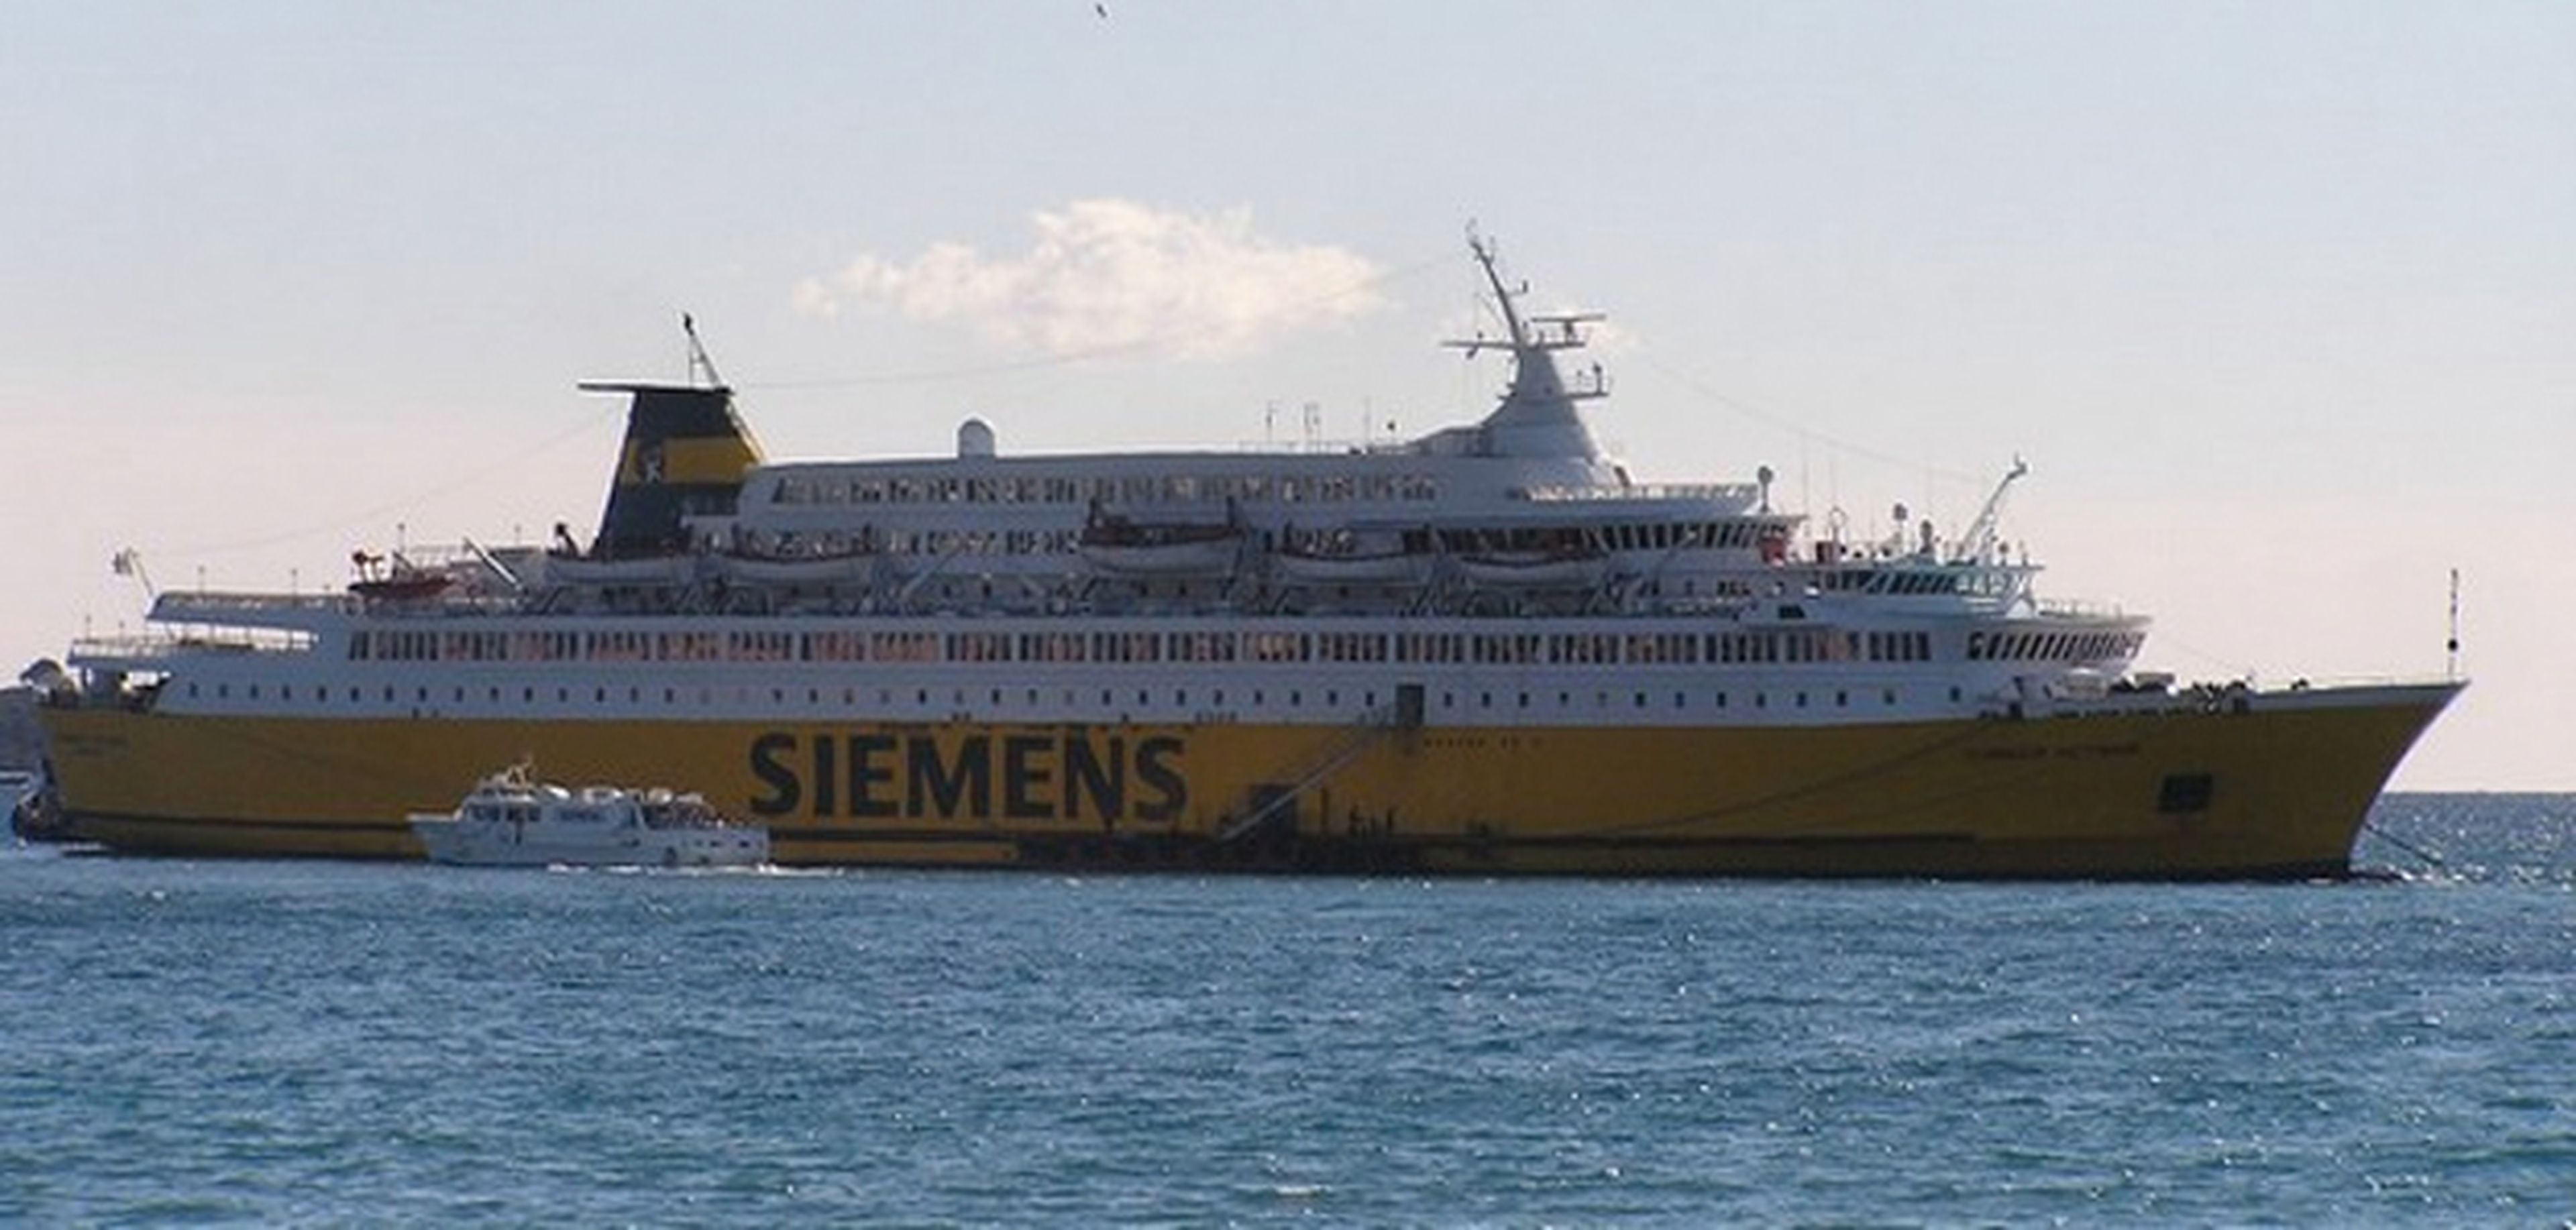 Barco Siemens Barcelona